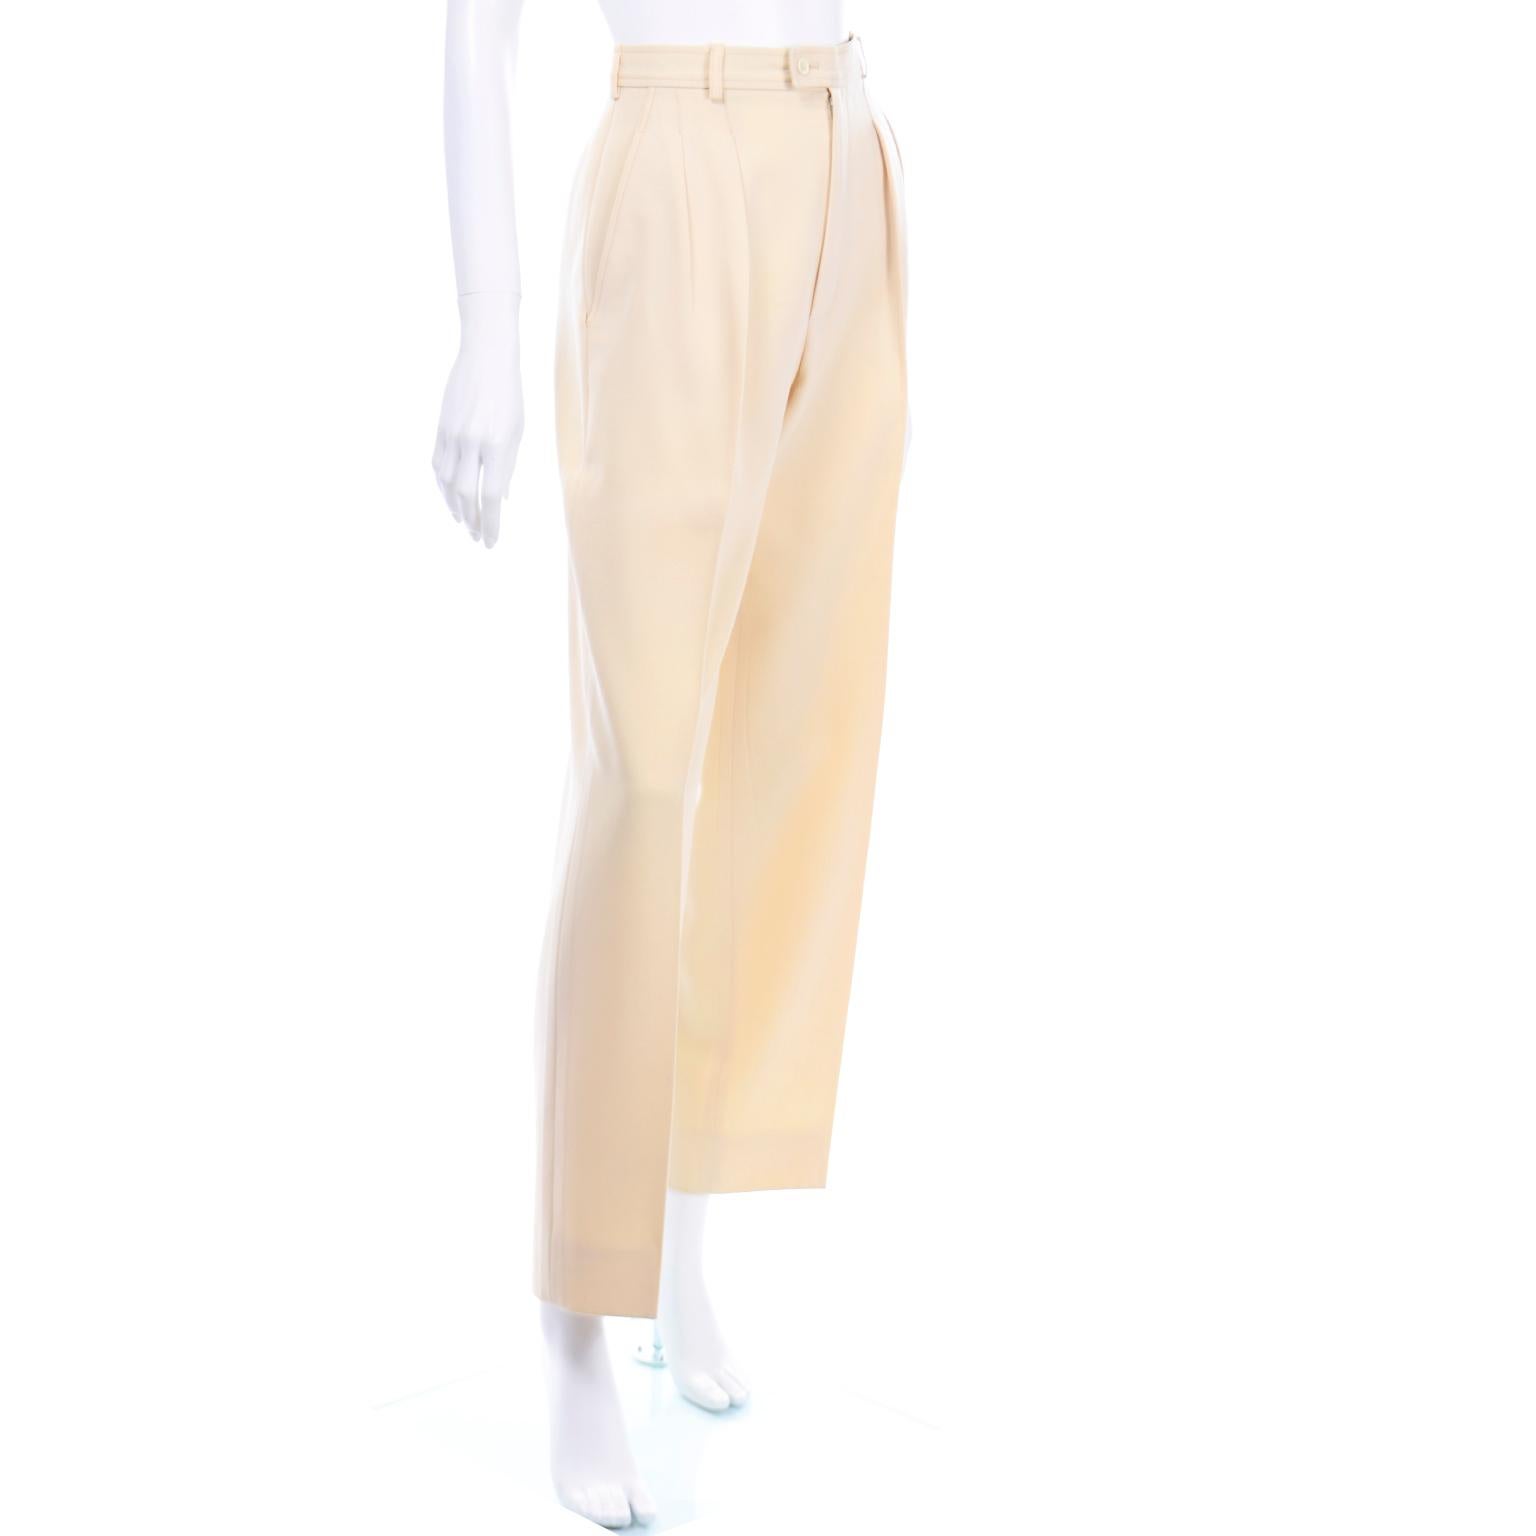 Women's Yves Saint Laurent Pants Vintage High Waisted Cream Trousers